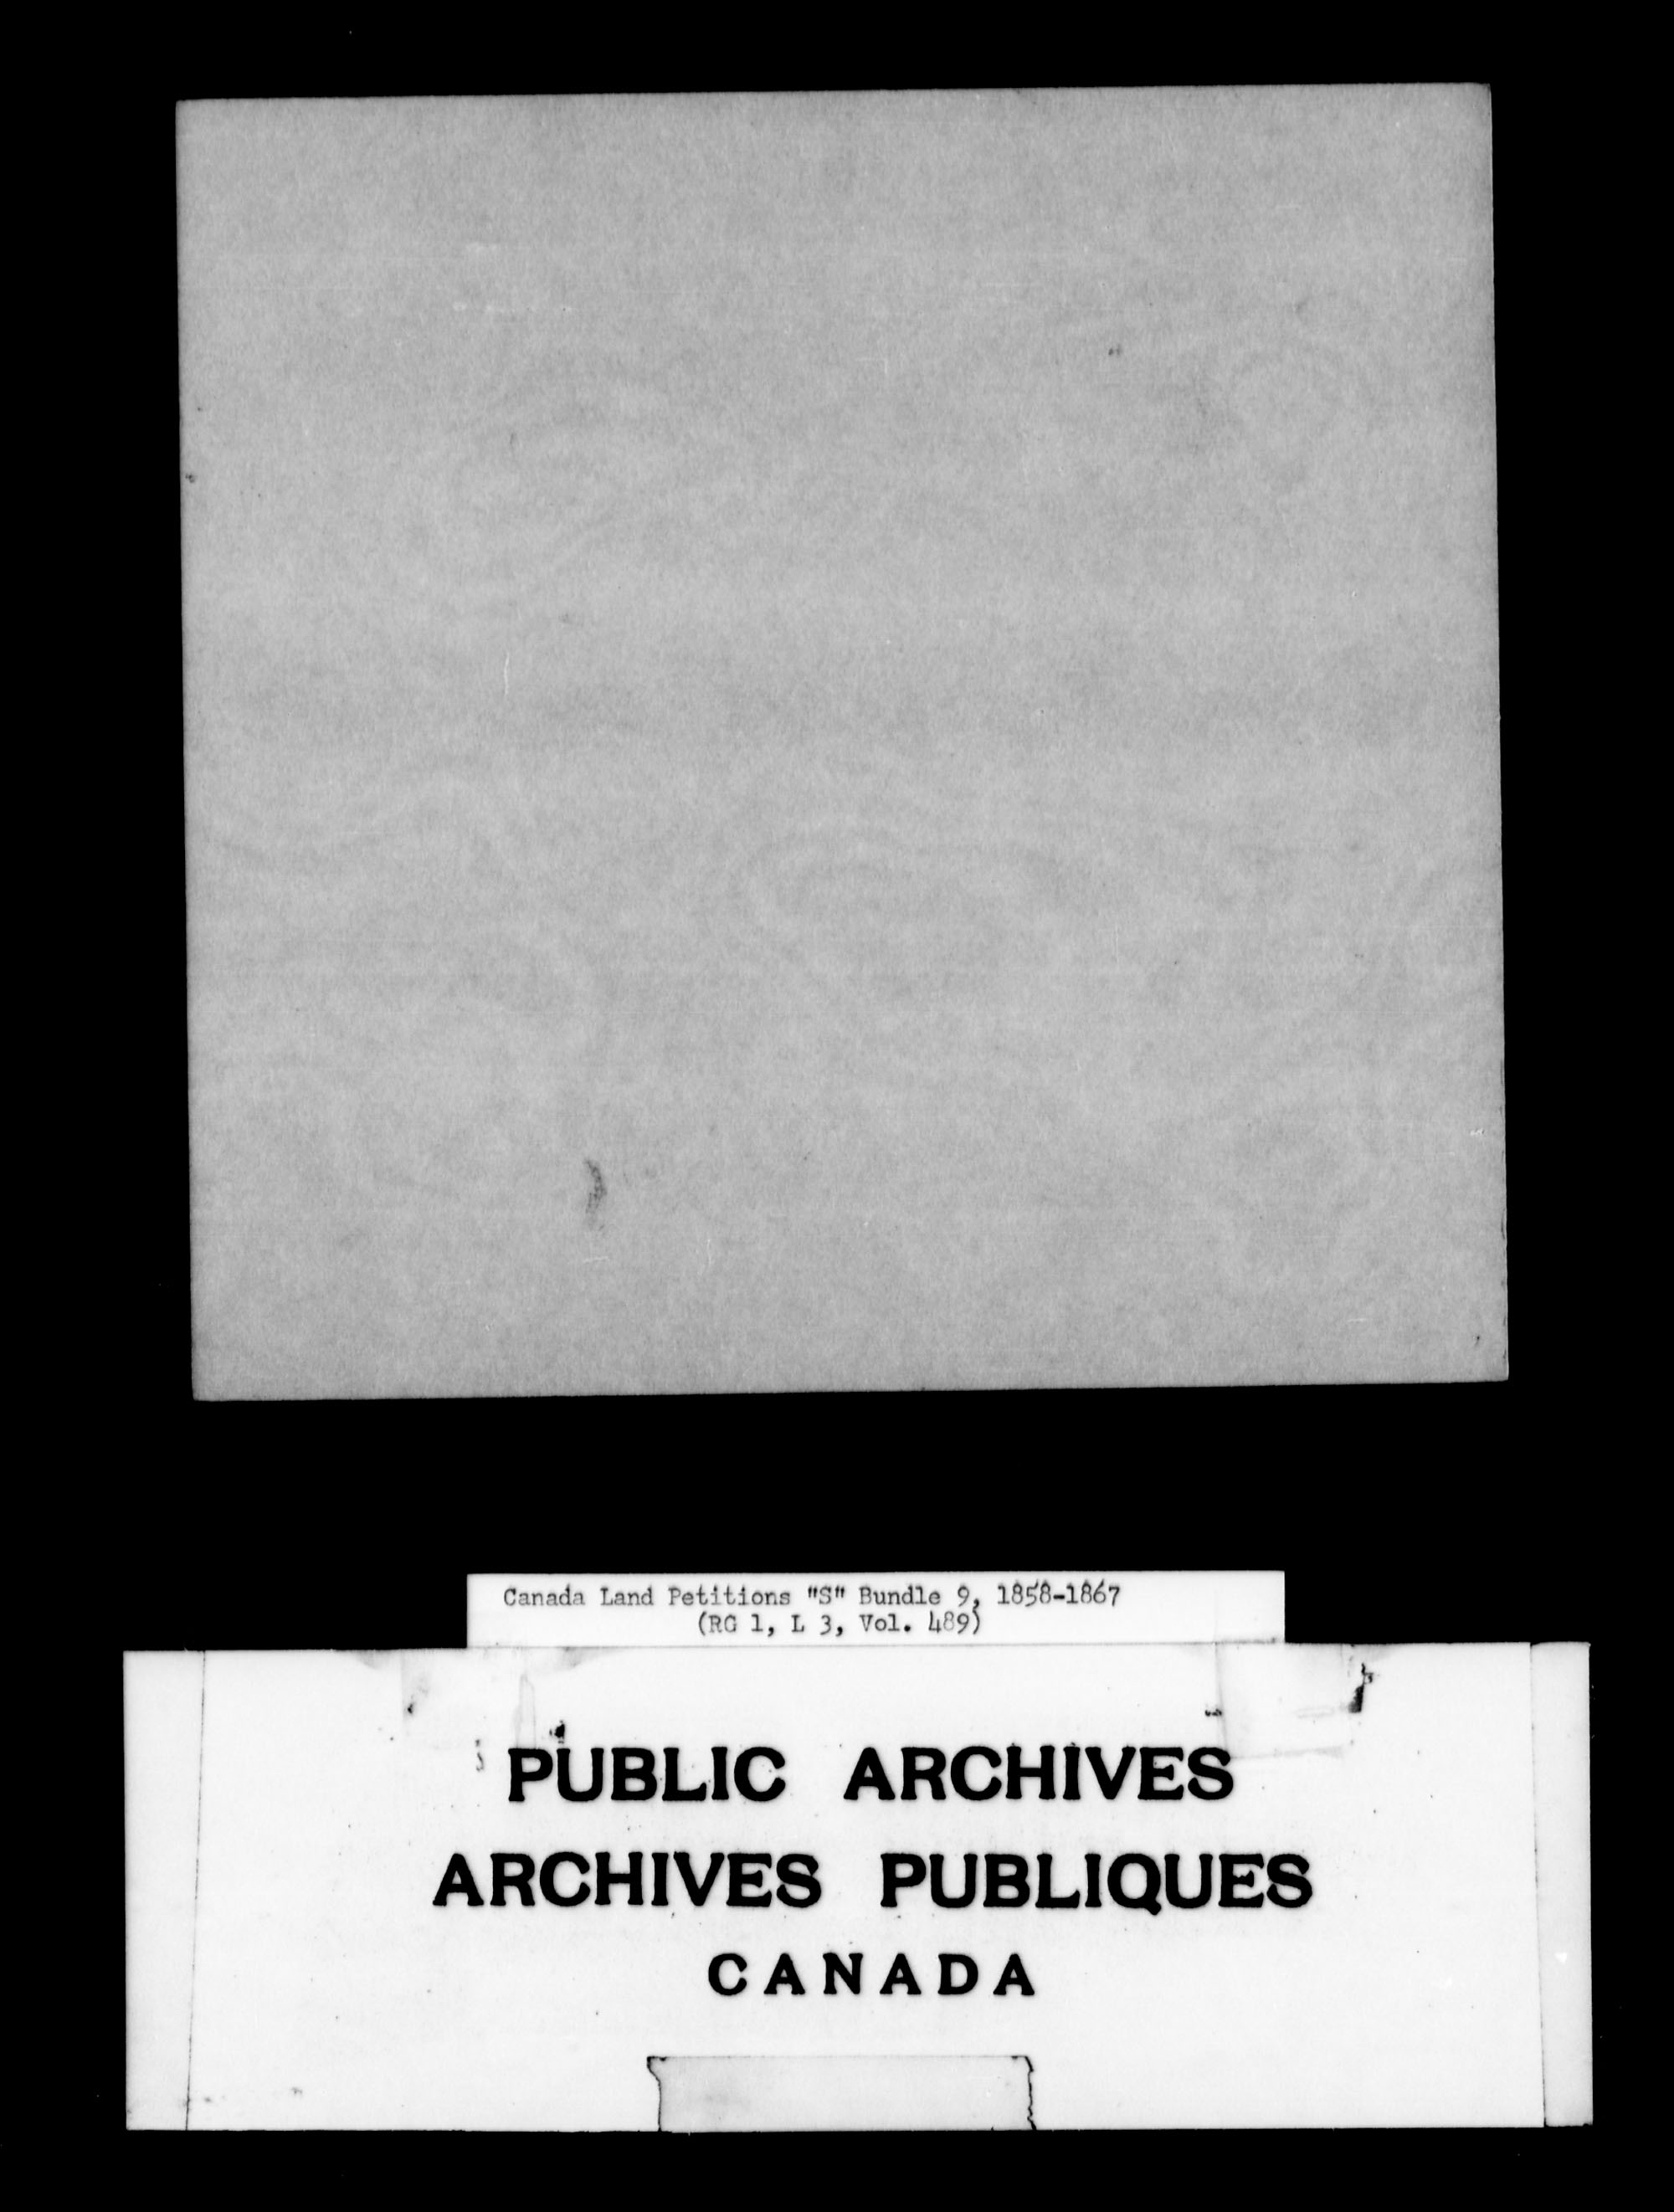 Titre : Demandes de terres du Haut-Canada (1763-1865) - N d'enregistrement Mikan : 205131 - Microforme : c-2830